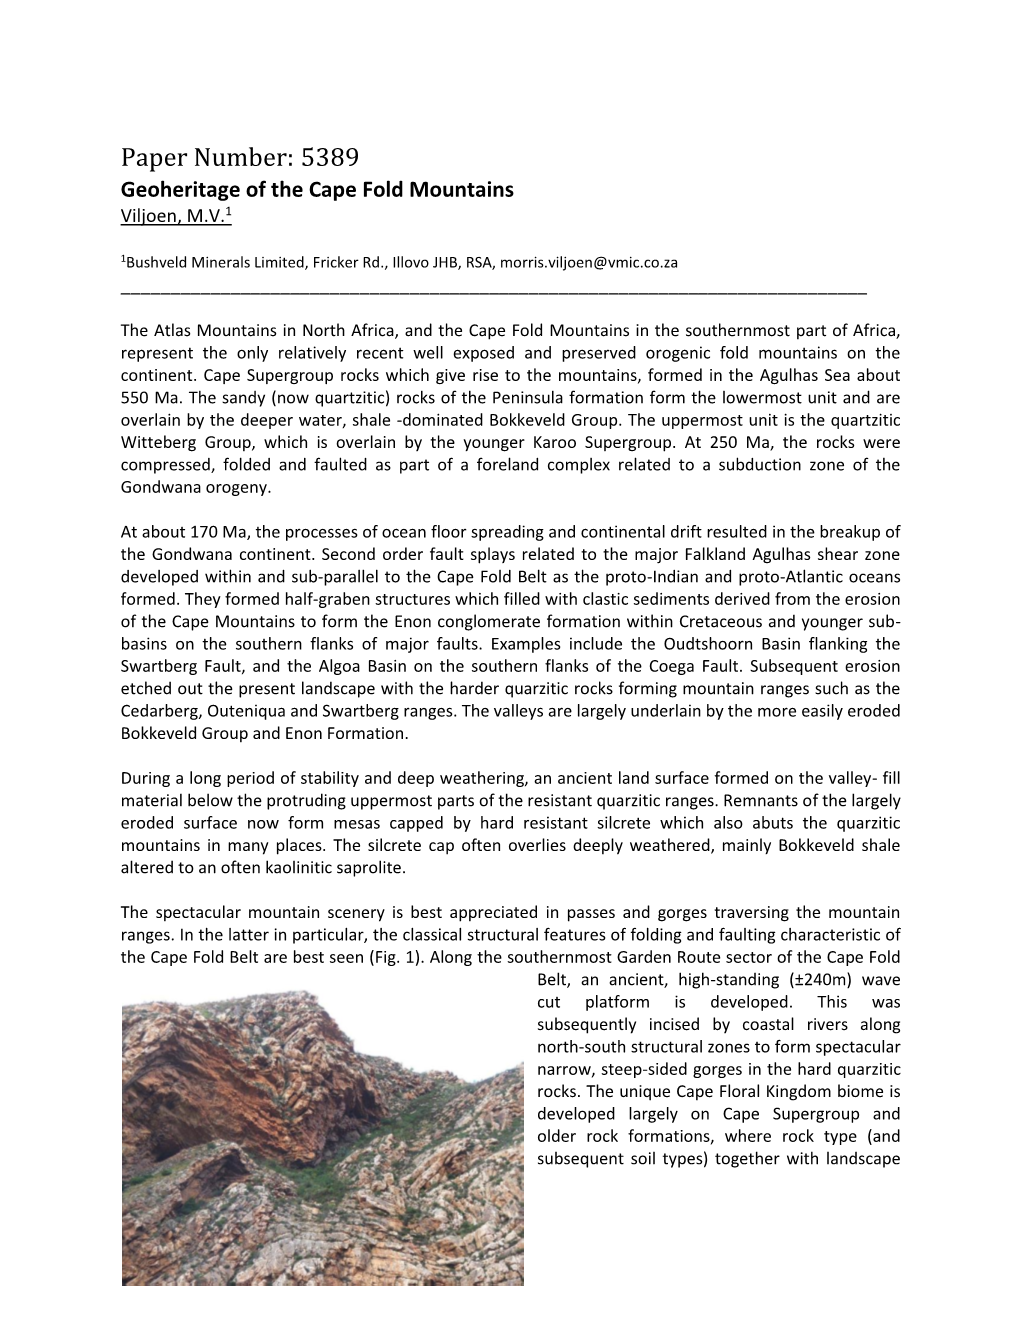 Paper Number: 5389 Geoheritage of the Cape Fold Mountains Viljoen, M.V.1